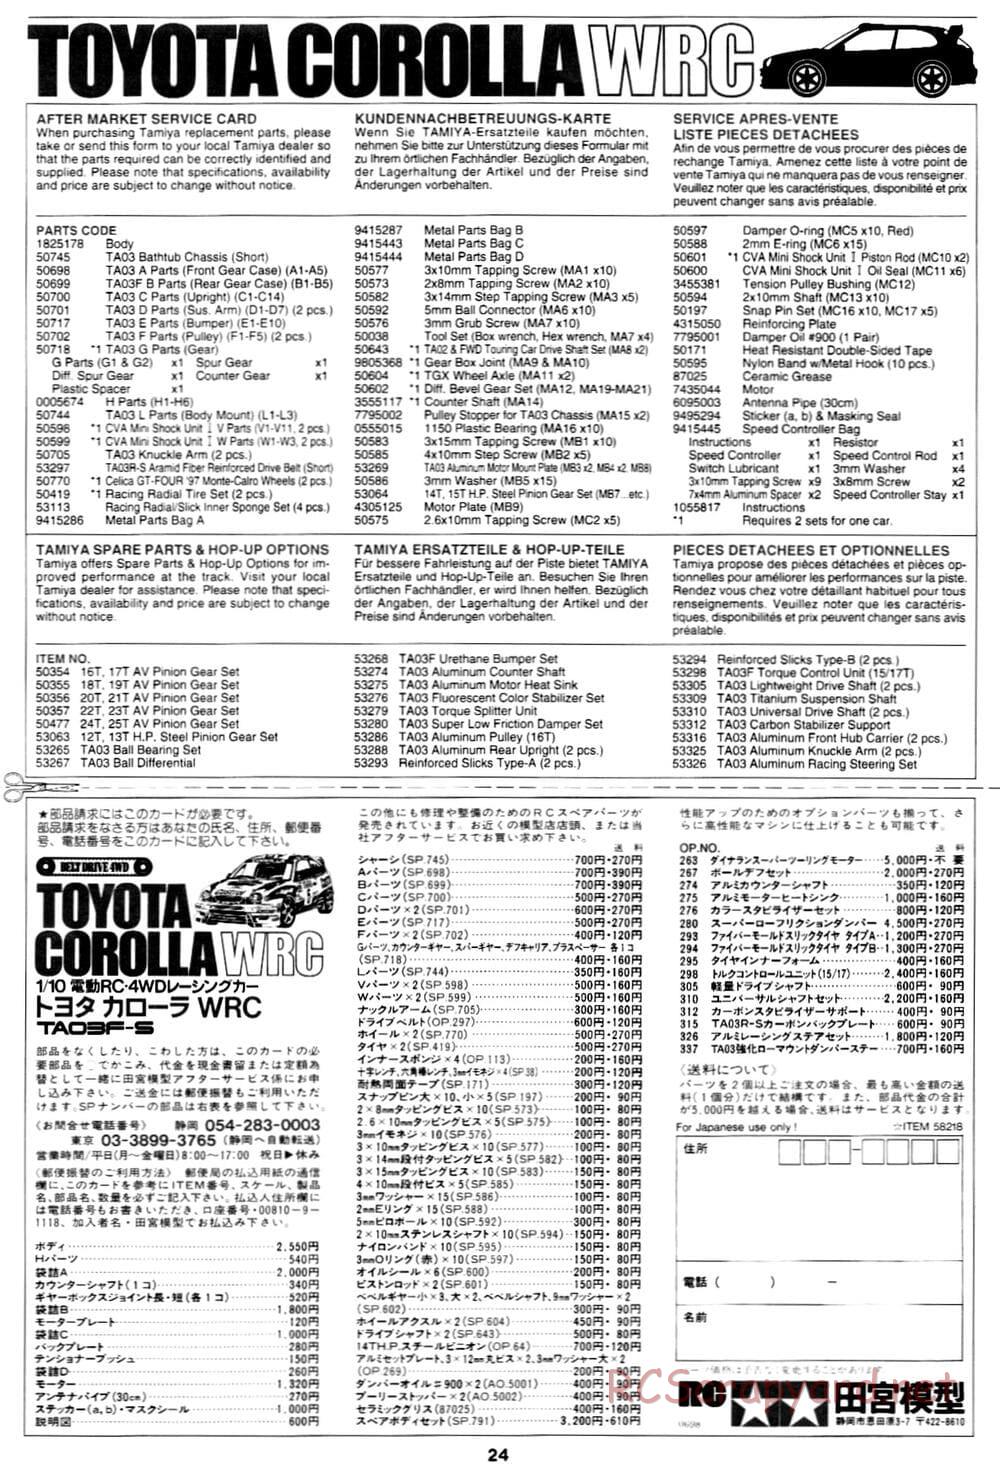 Tamiya - Toyota Corolla WRC - TA-03FS Chassis - Manual - Page 24